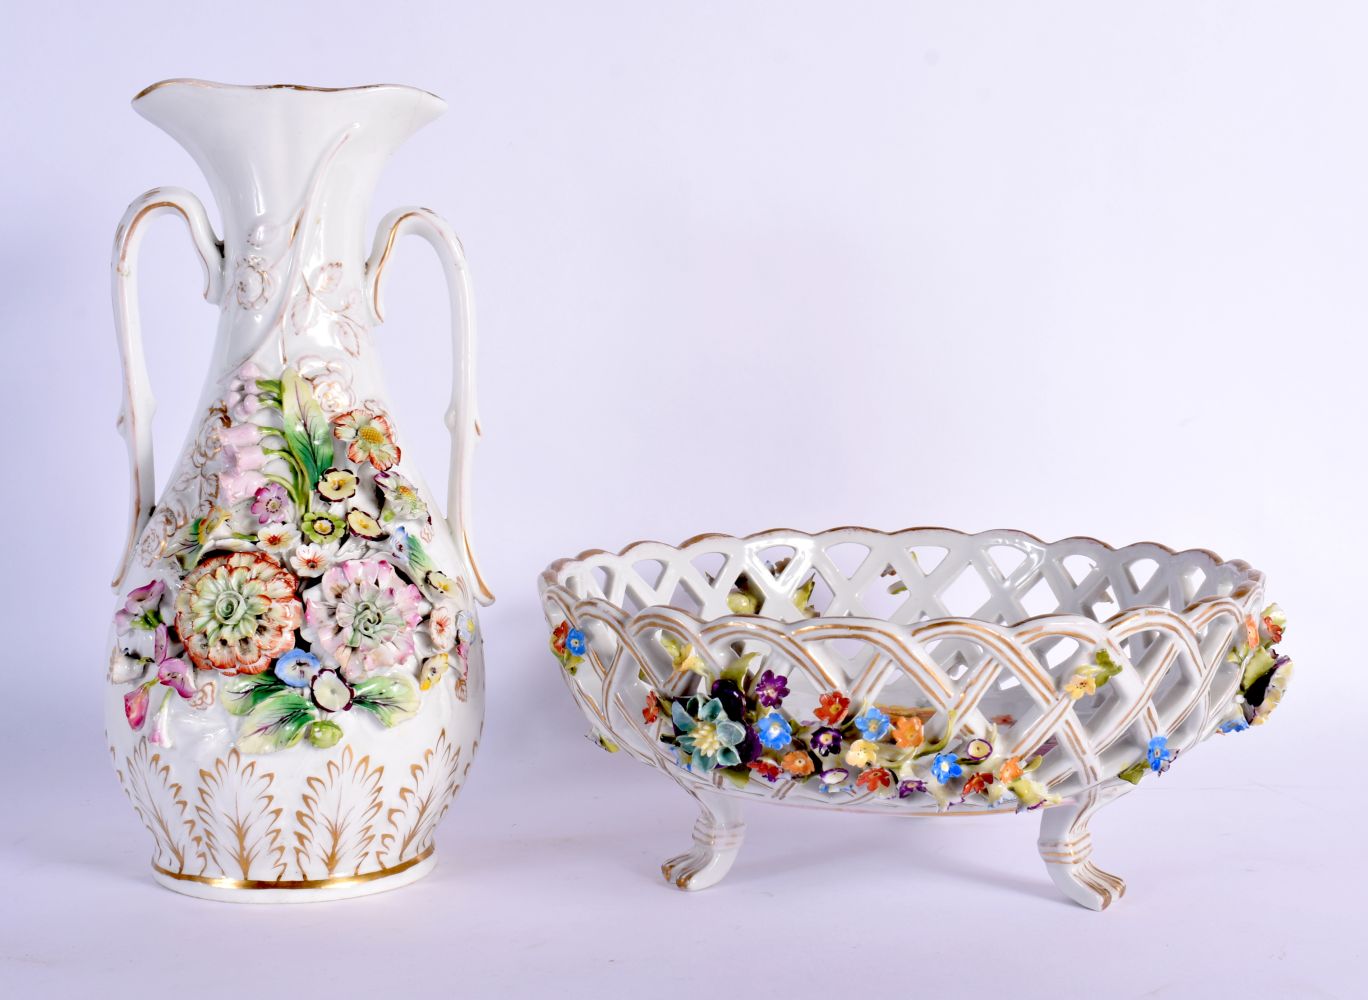 A CONTINENTAL RETICULATED PORCELAIN BASKET together with a twin handled encrusted porcelain vase. La